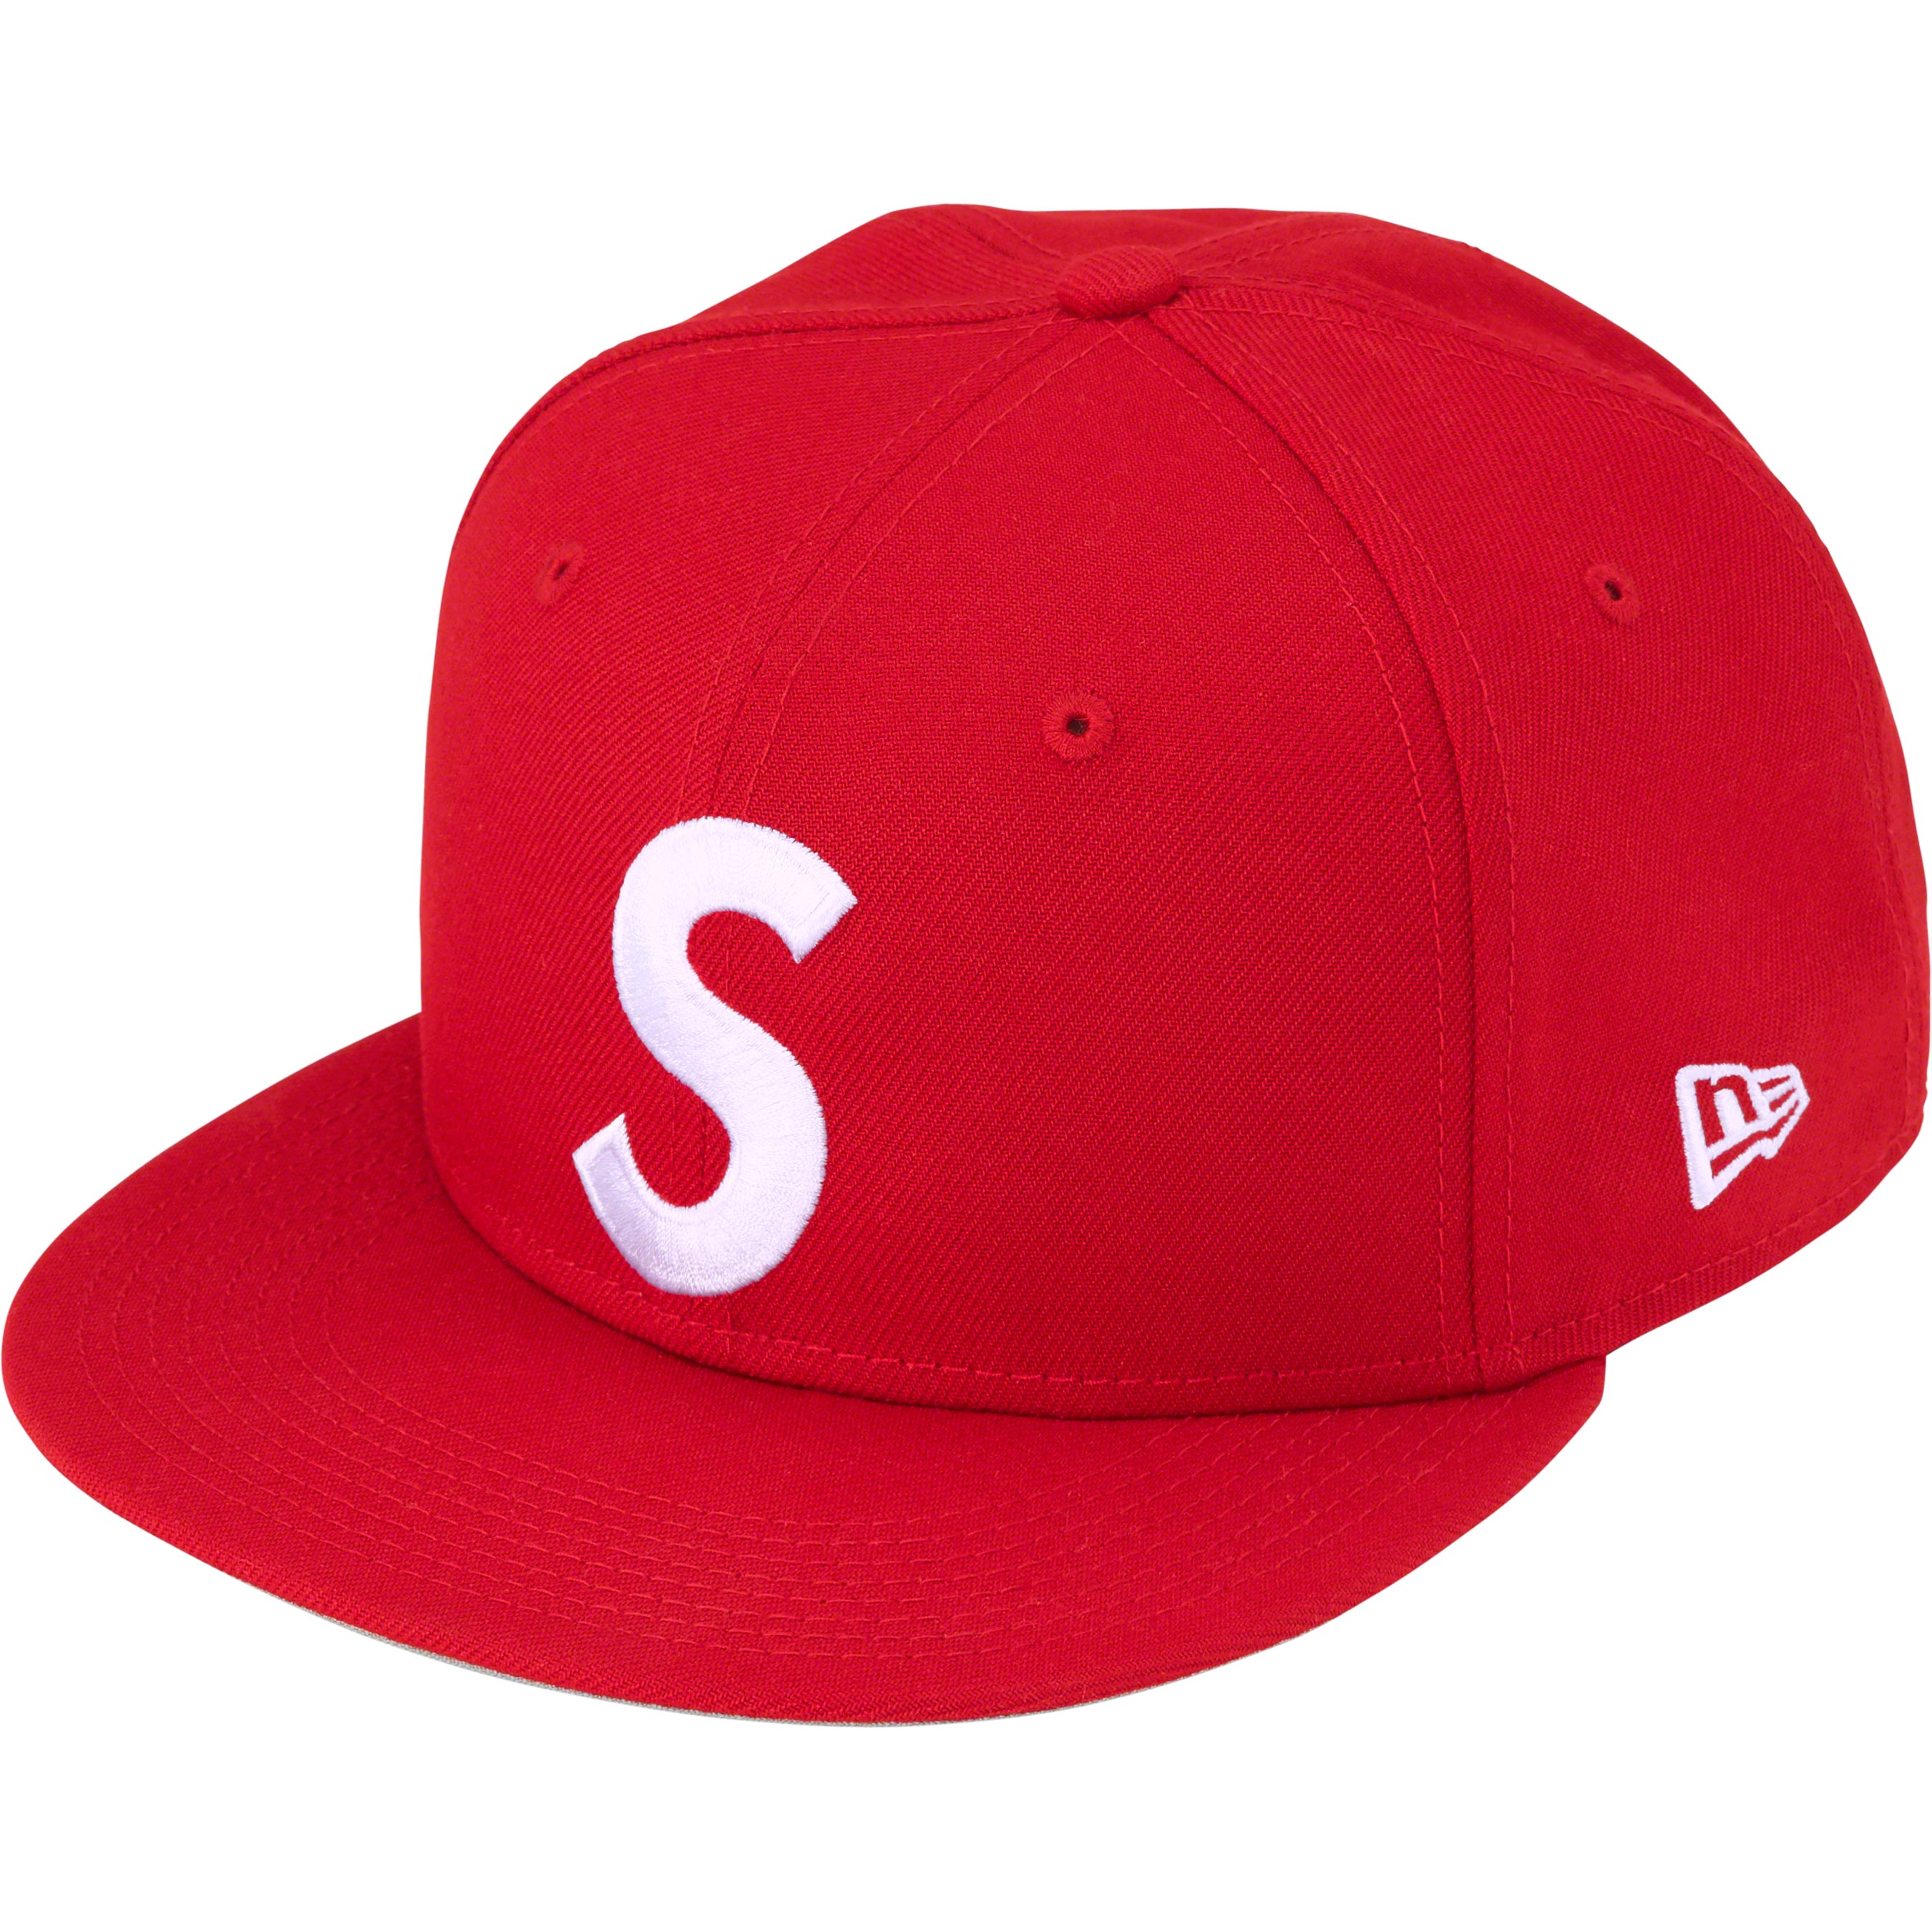 supreme baseball hat